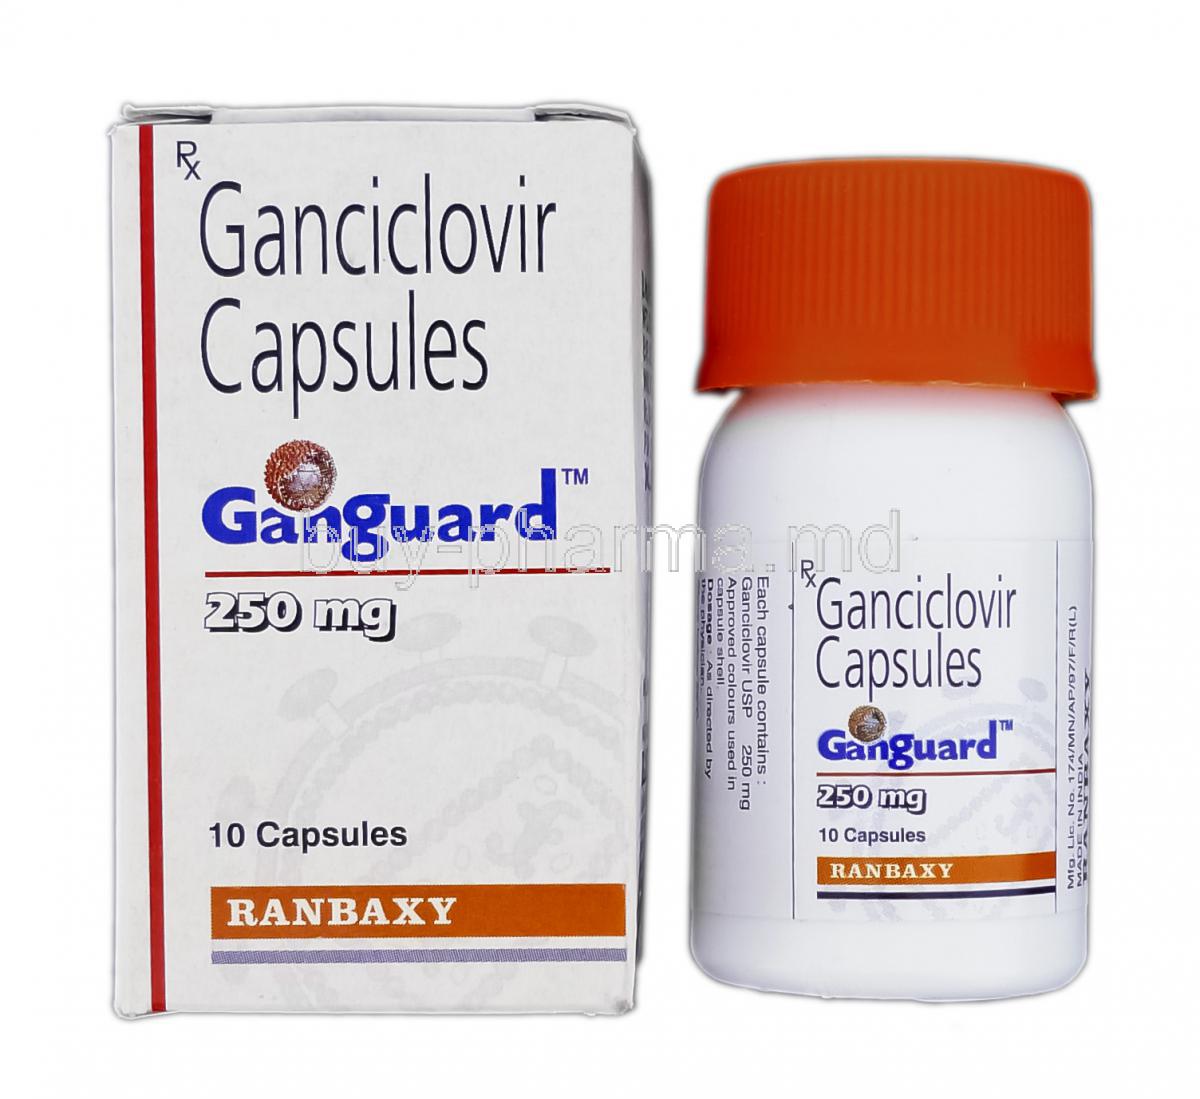 Ganguard, Generic Cytovene, Ganciclovir, 250 mg, Box and Bottle